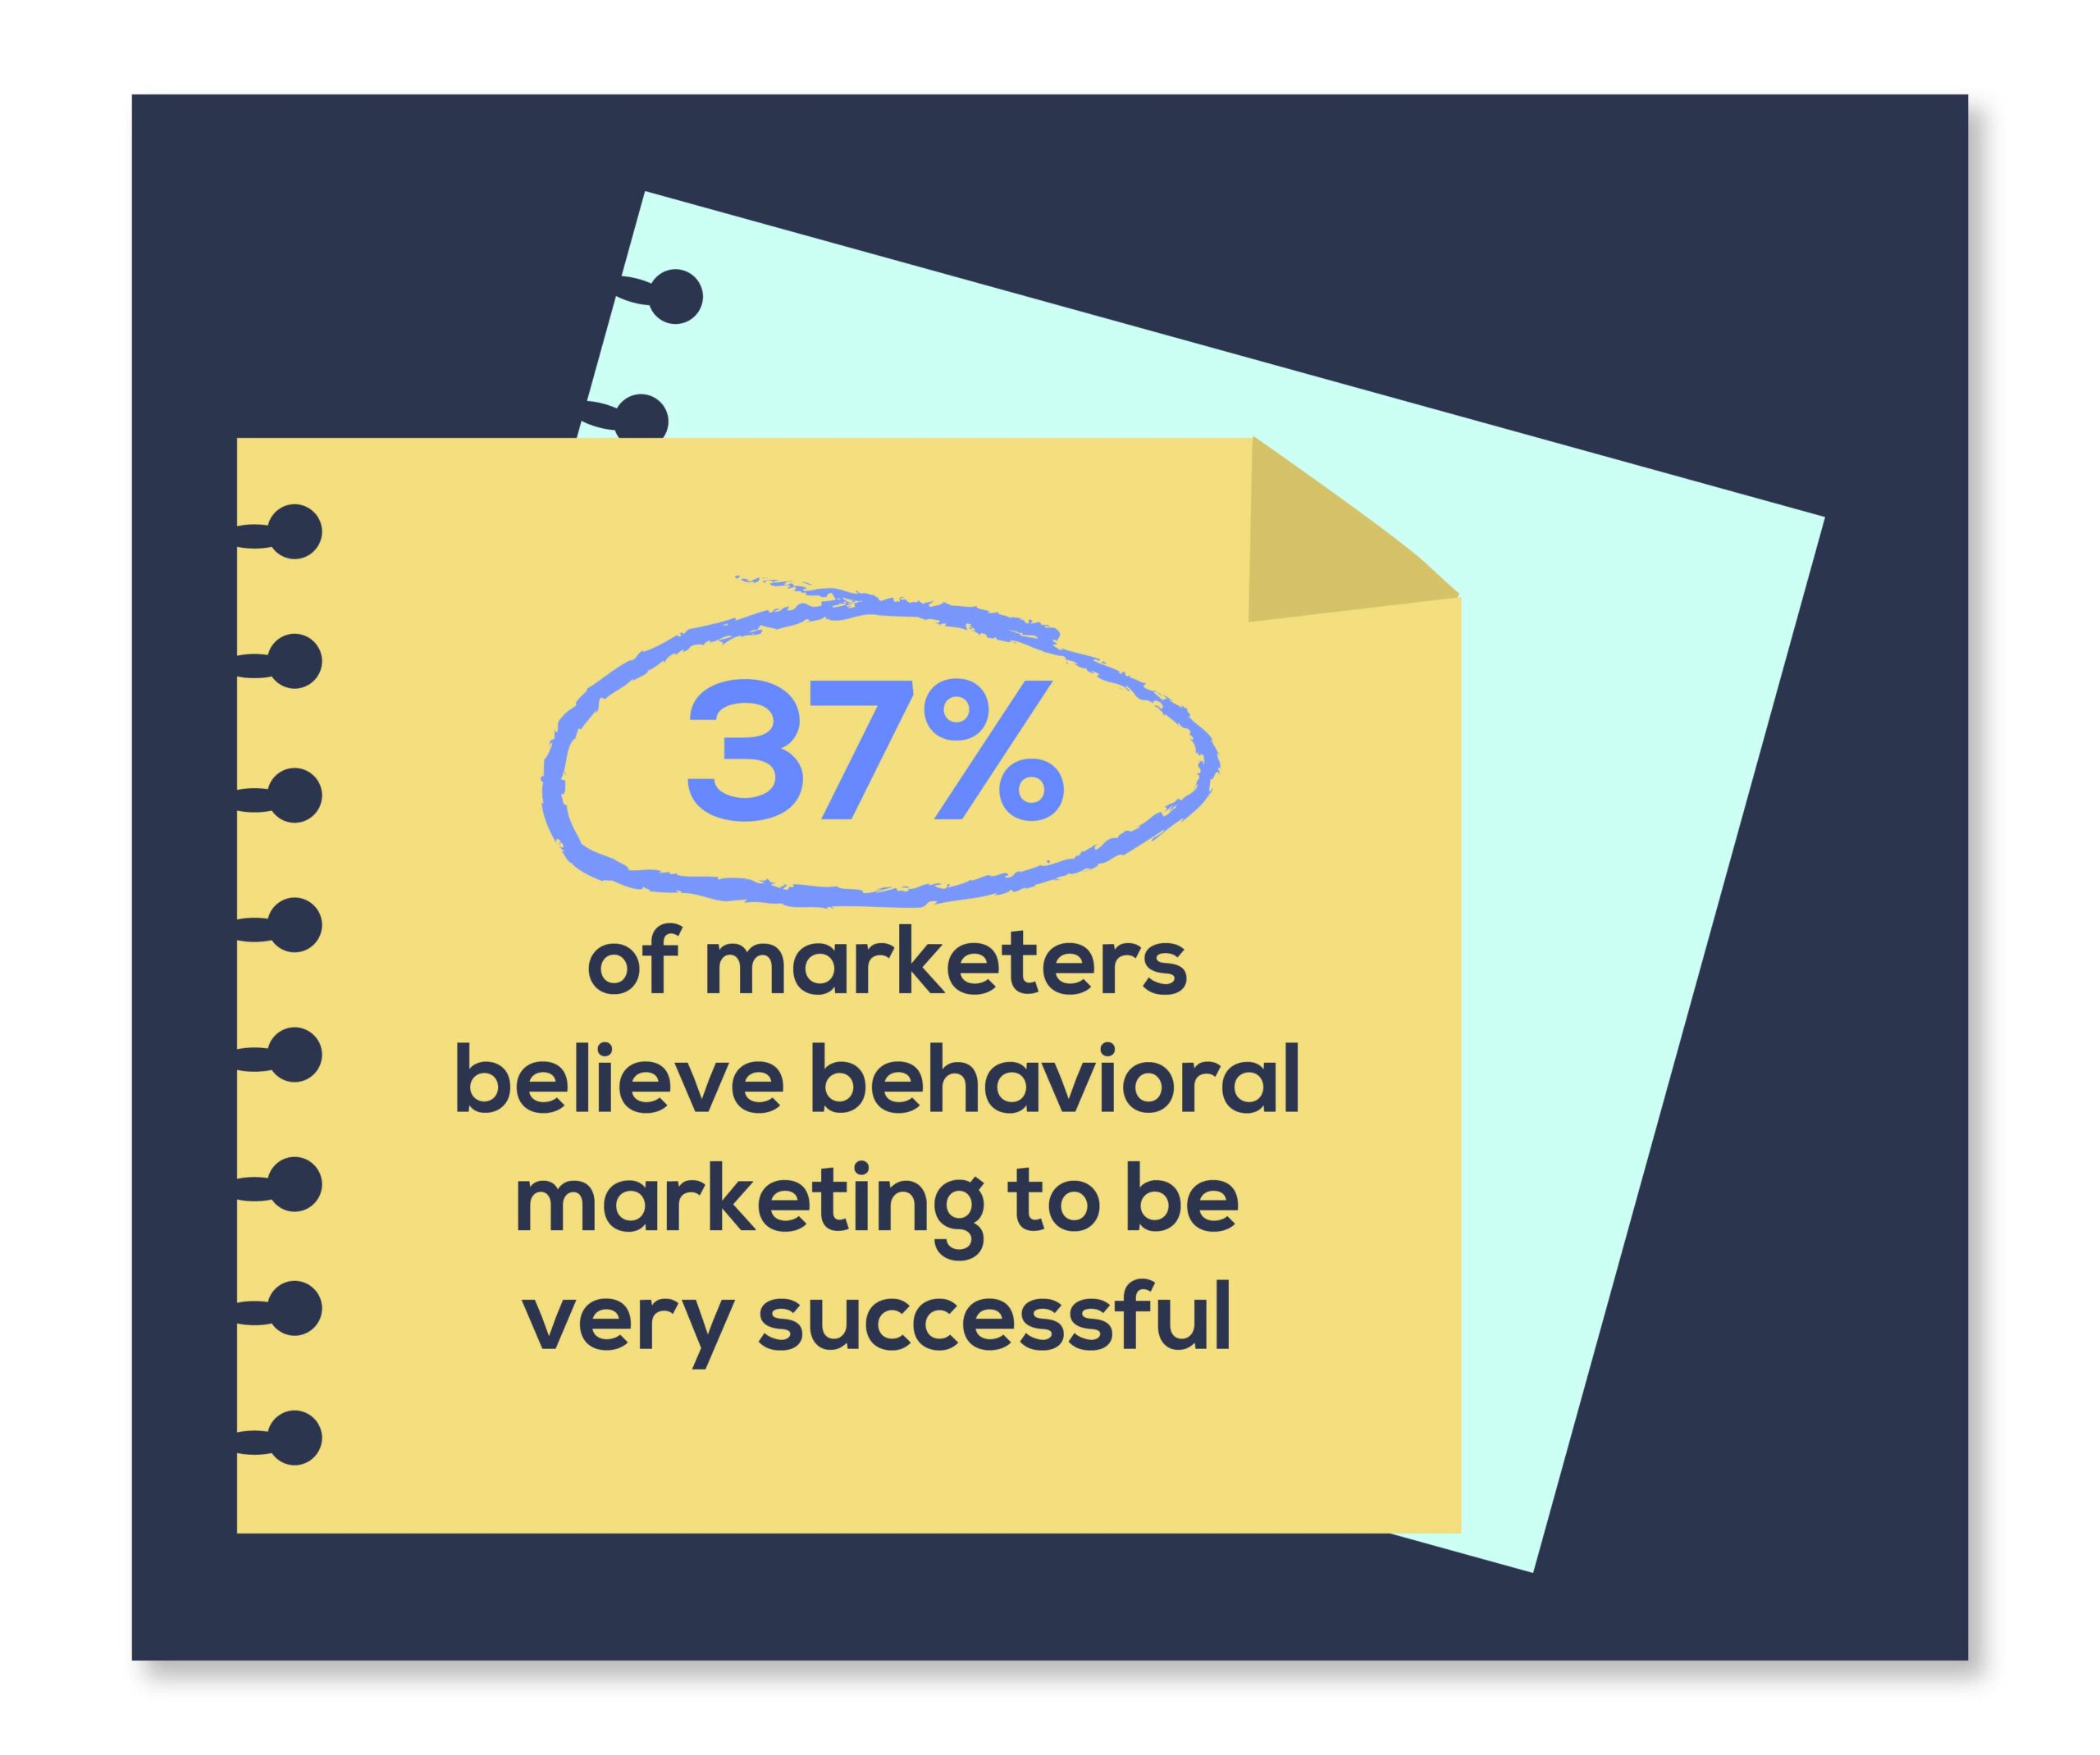 Marketers believe behavioral marketing is very successful